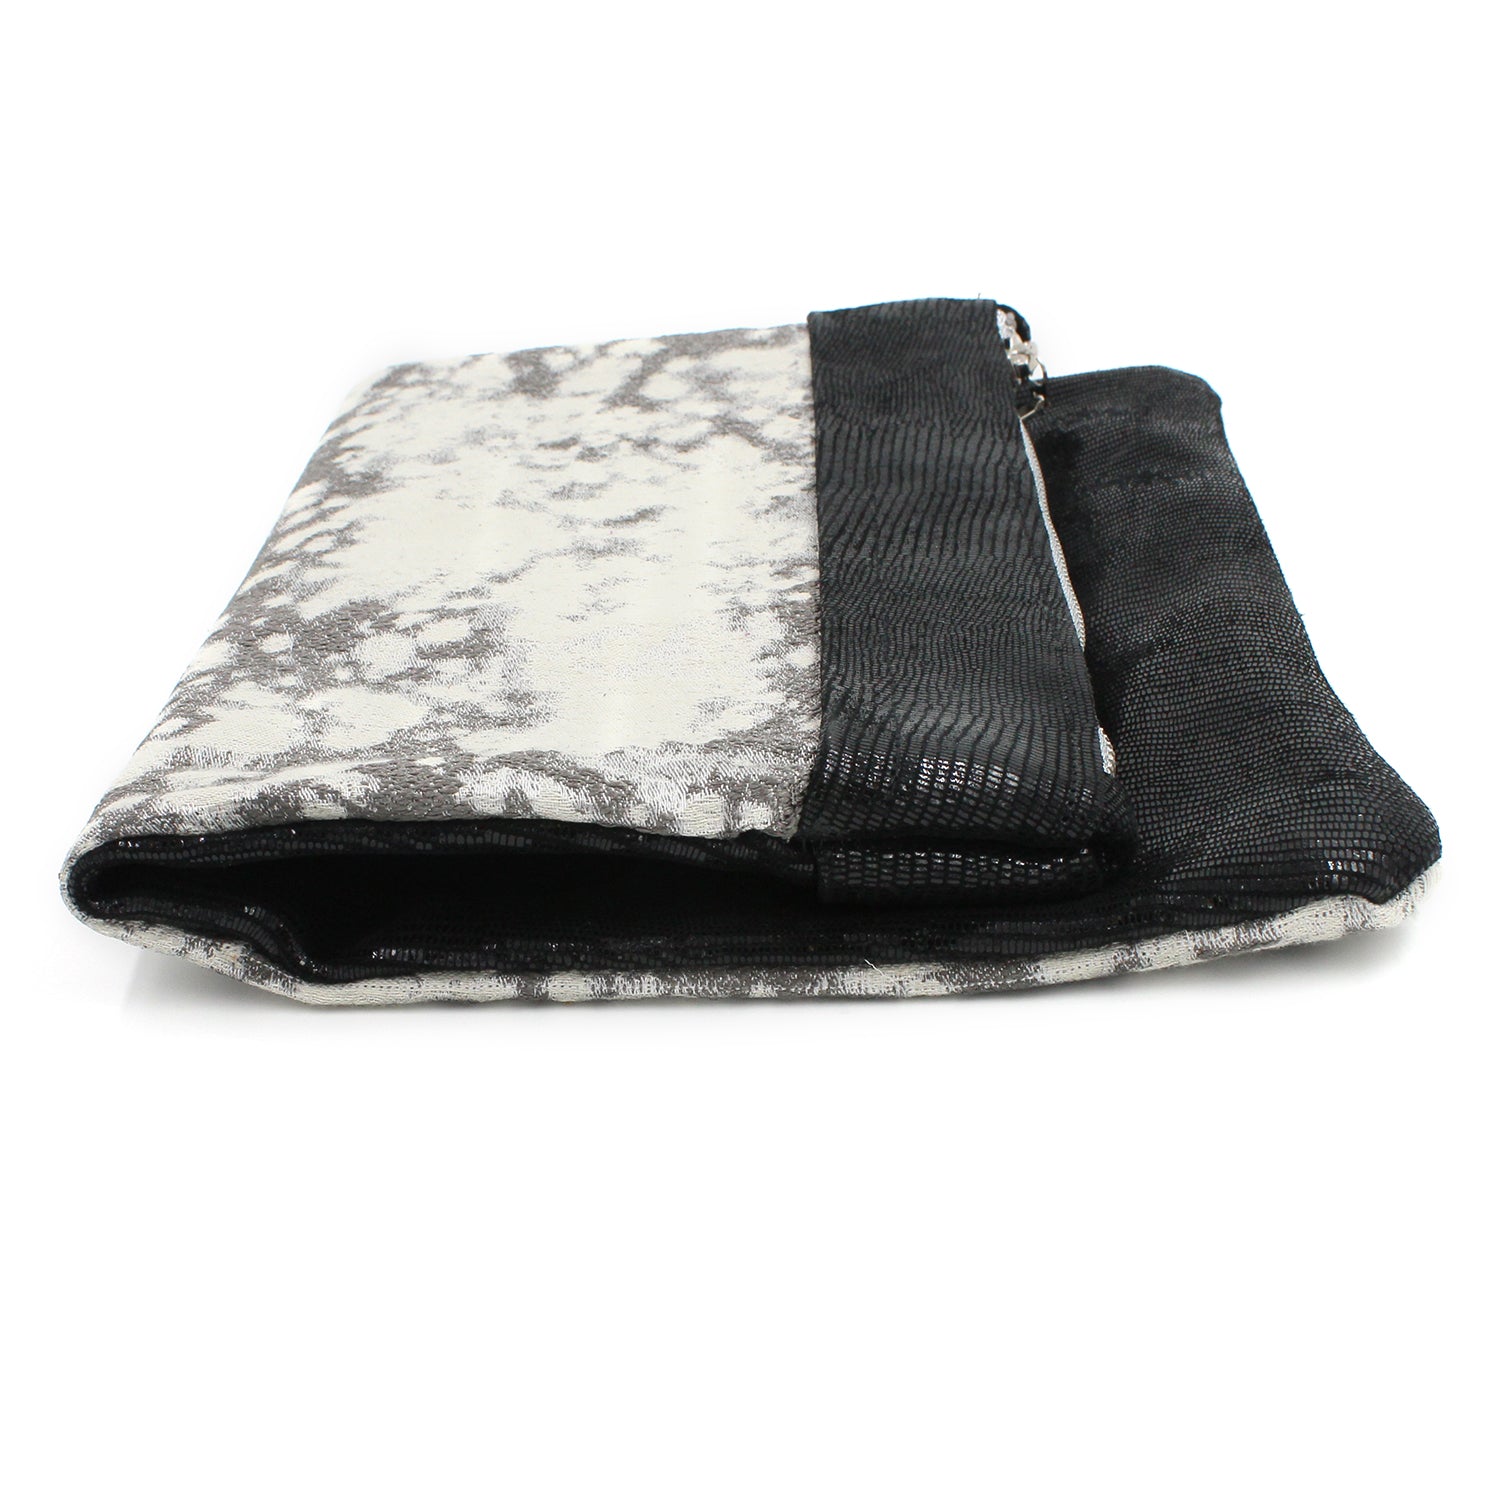 Black & White Metallic Mixed Leather & Fabric Clutch